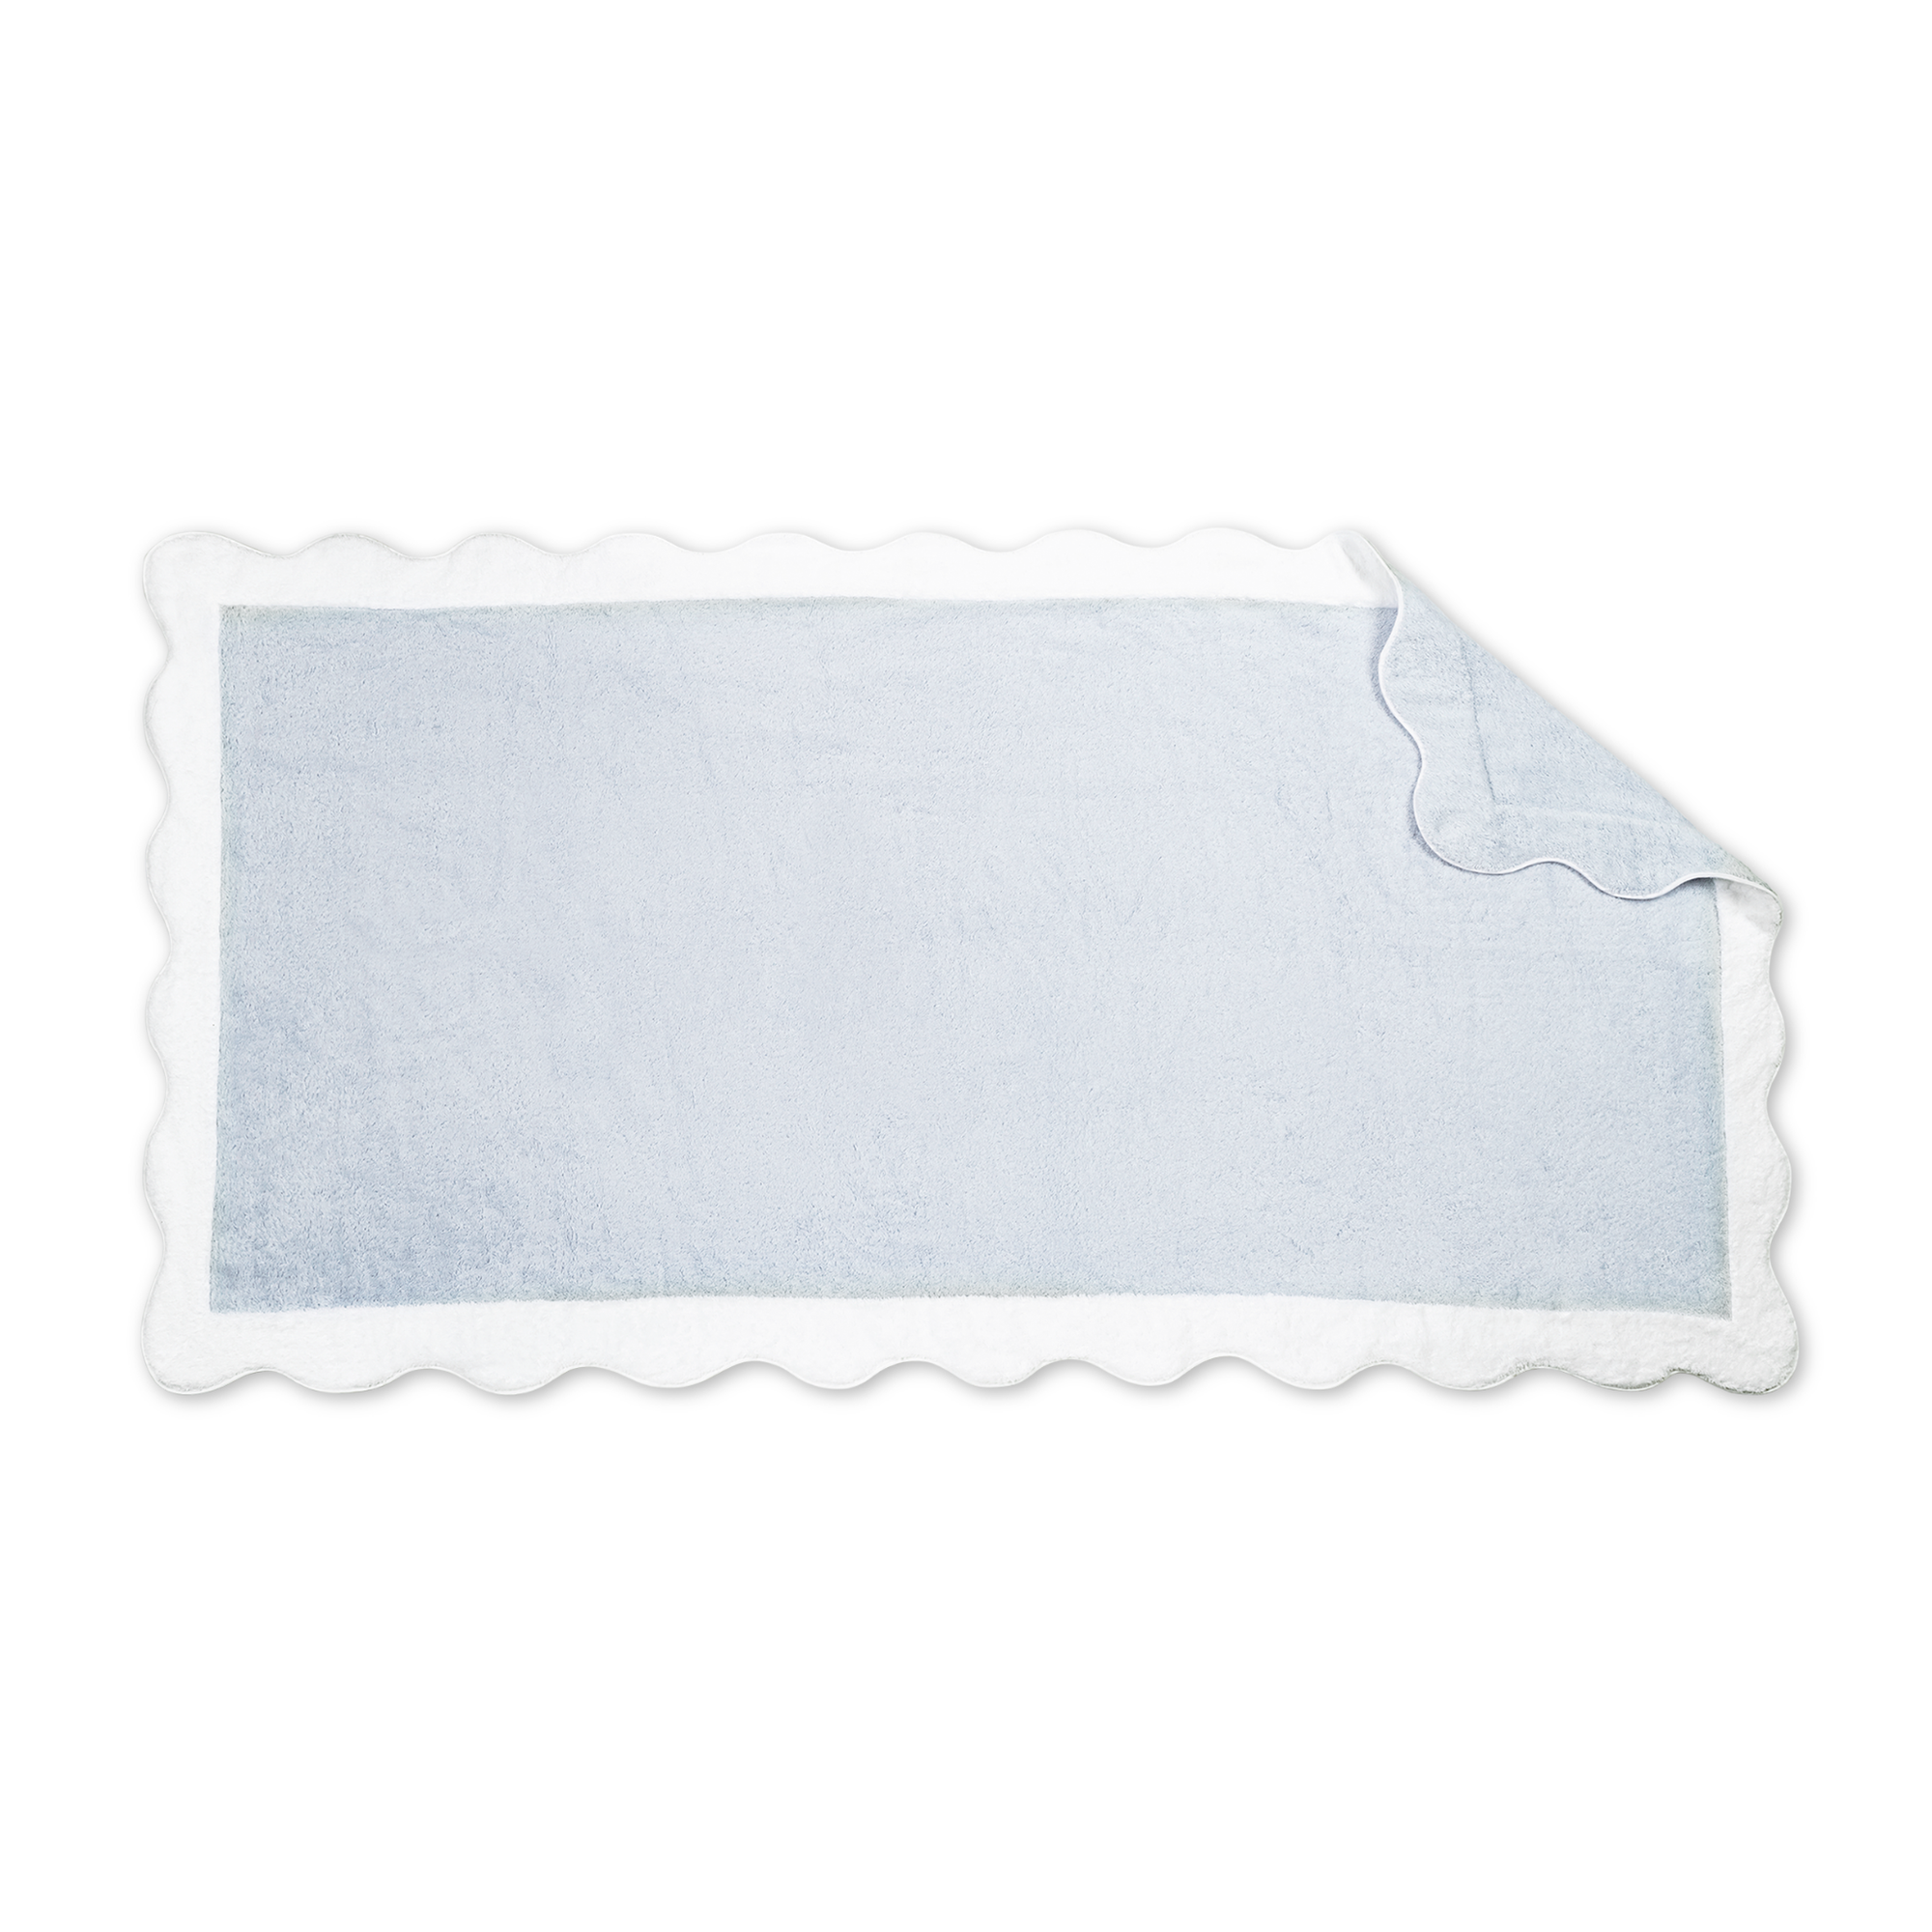 Matouk Neptune Beach Towels in Light Blue/White